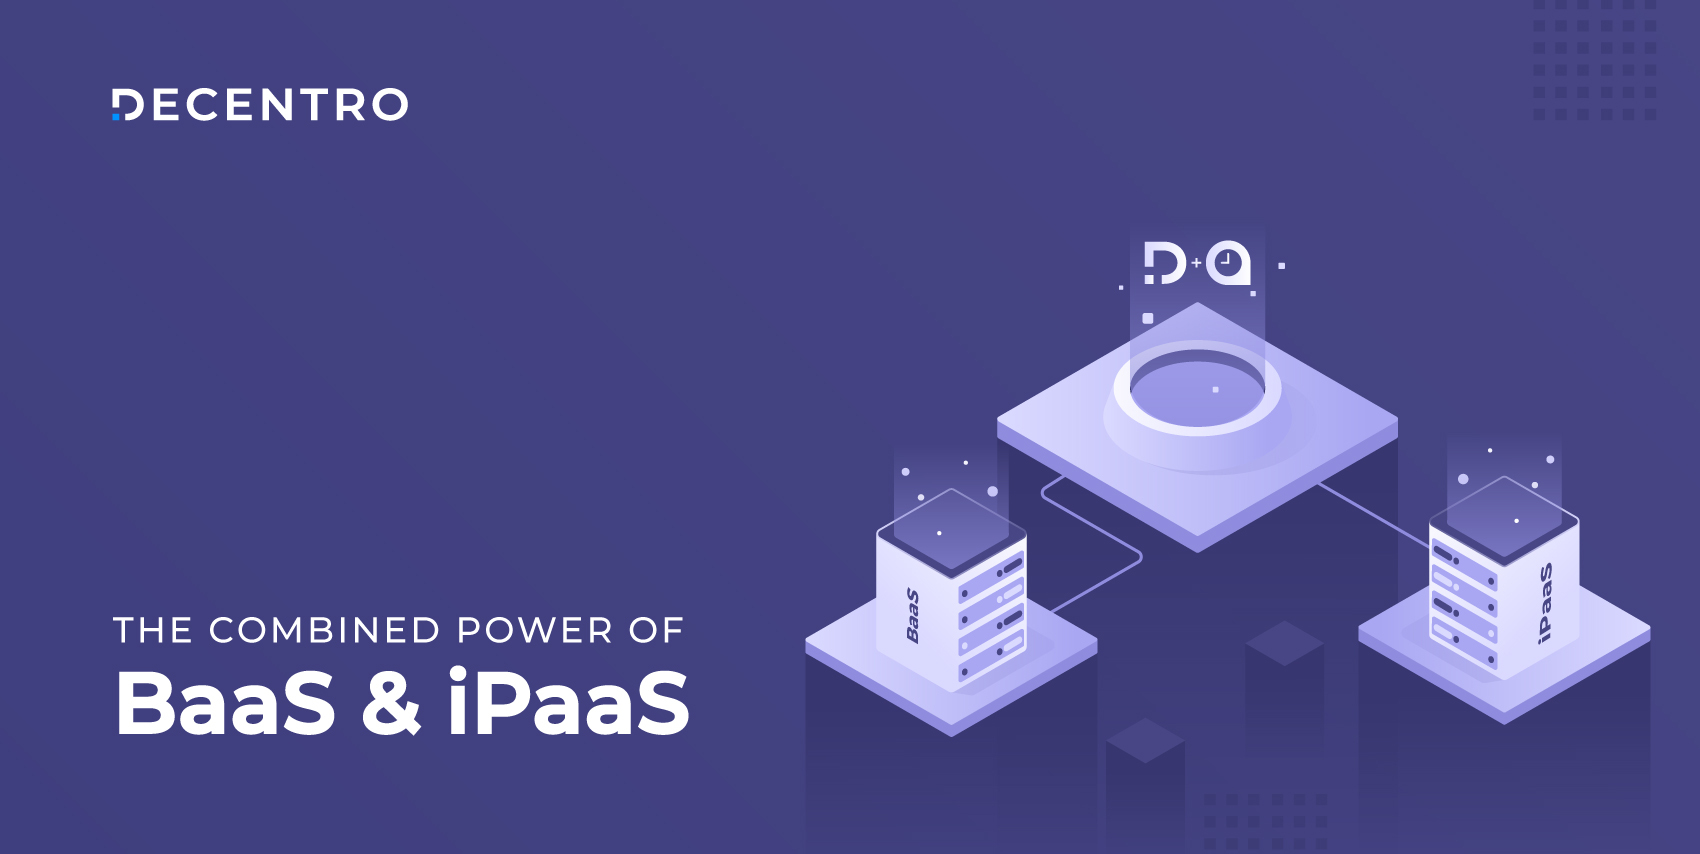 The iPaaS & BaaS integration via Quickwork - Decentro partnership.